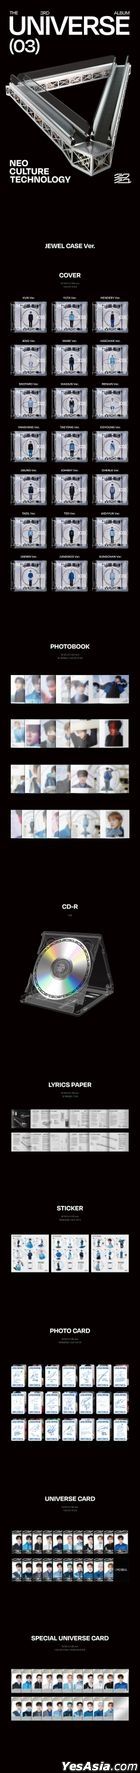 NCT Vol. 3 - Universe (Jewel Case Version) (Renjun Version) + Poster in Tube